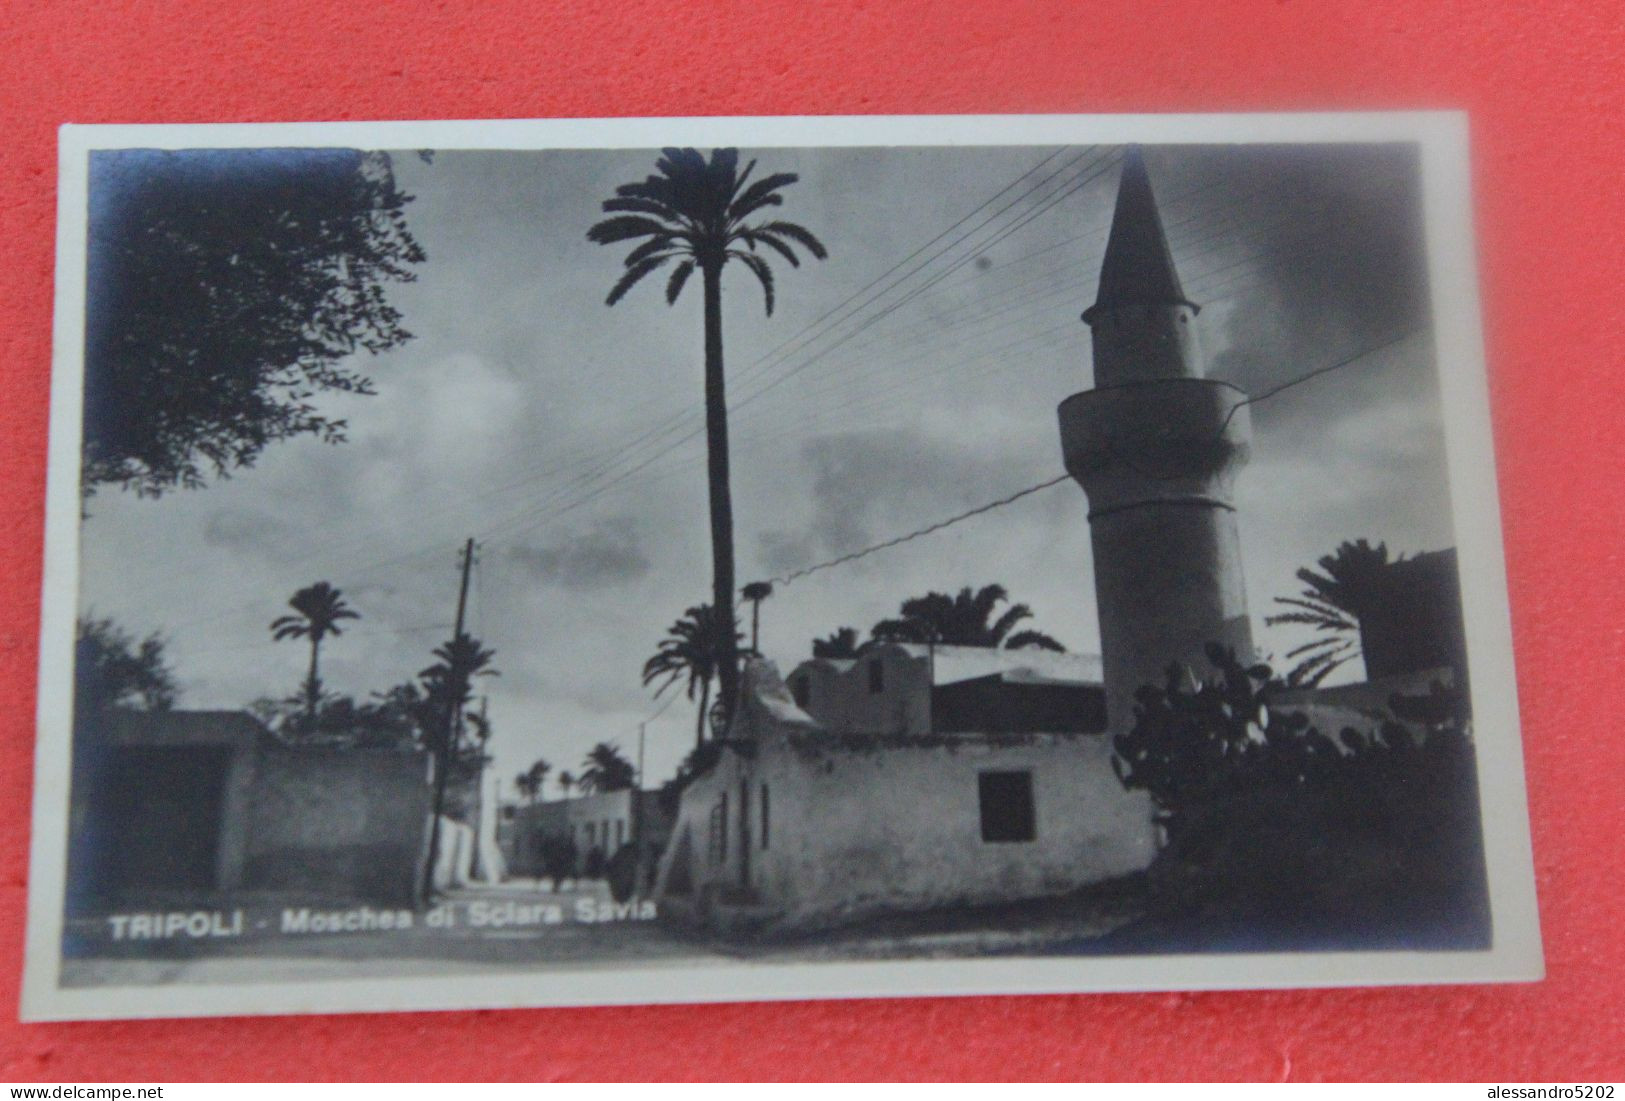 Libya Tripoli Moschea Sciara Savia Ed. Haggiag NV - Libia